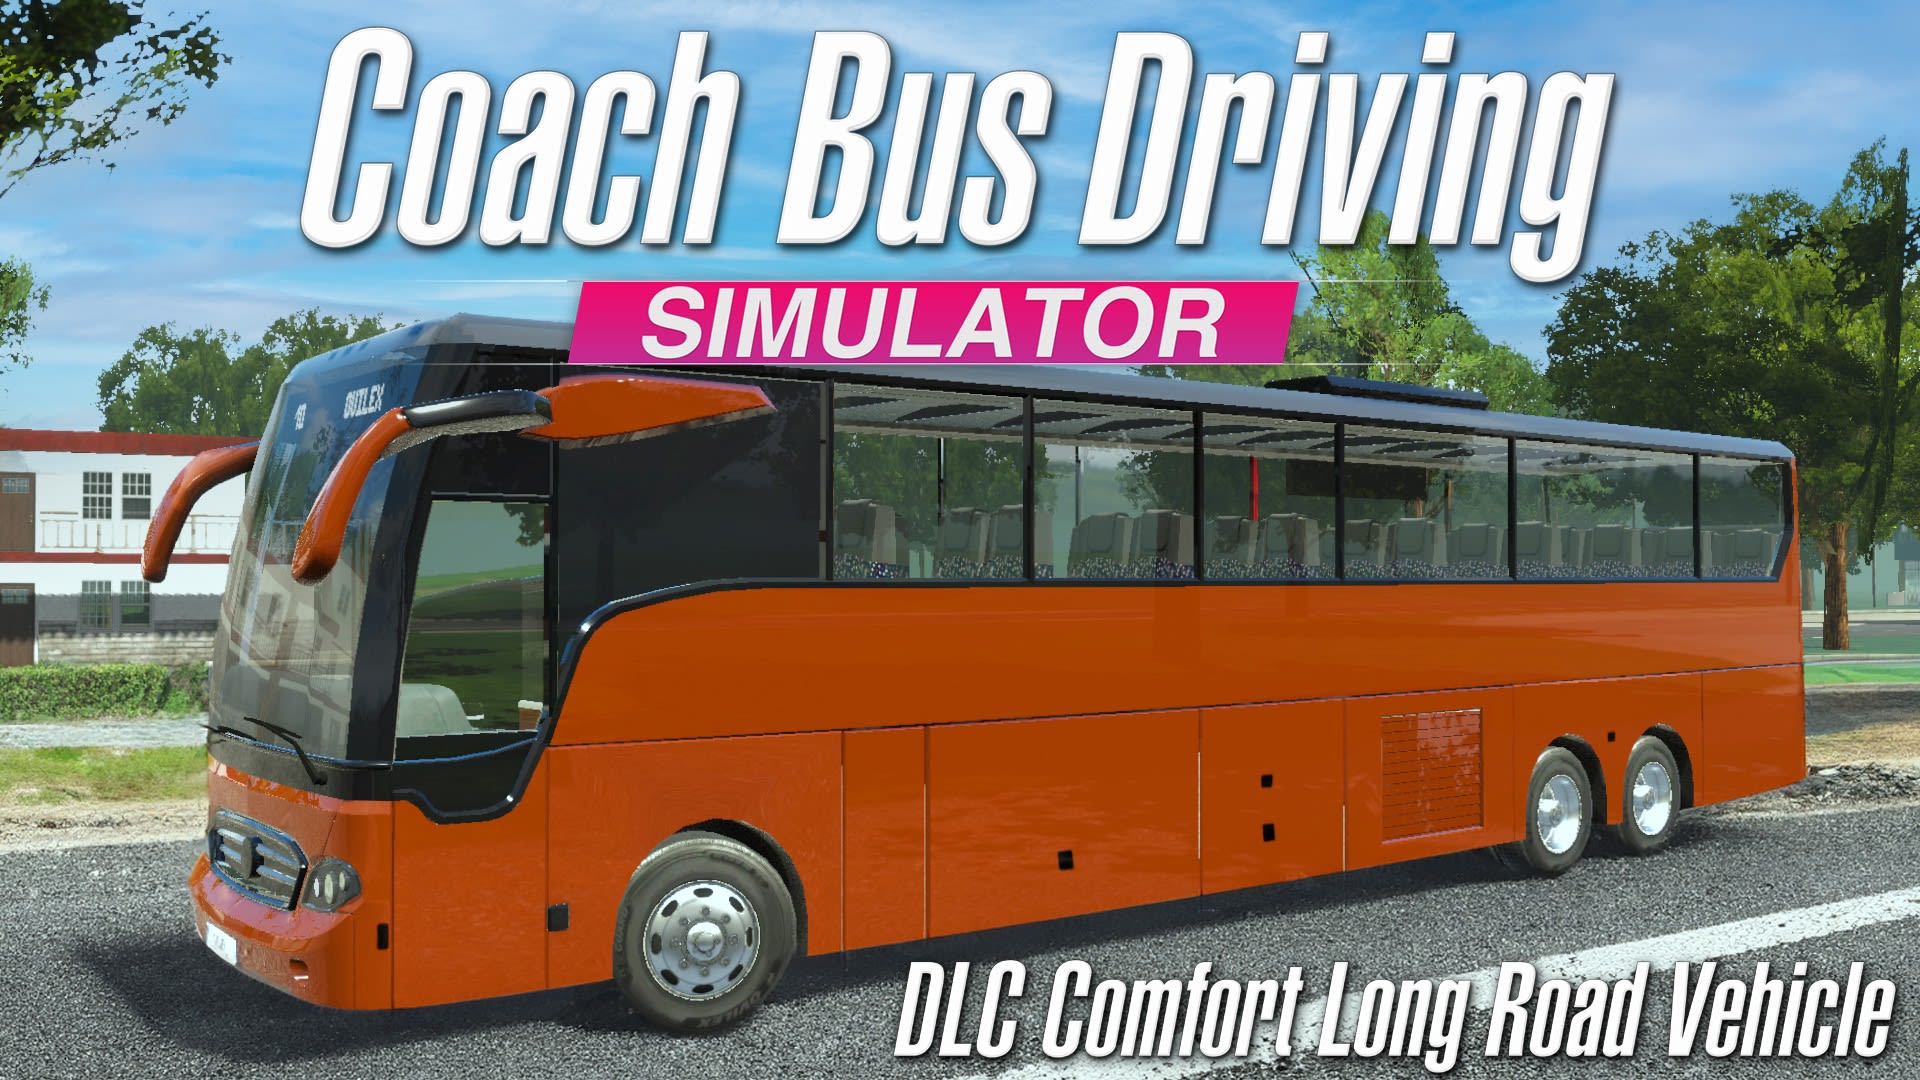 Coach Bus Driving Simulator - DLC Comfort Long Road Vehicle